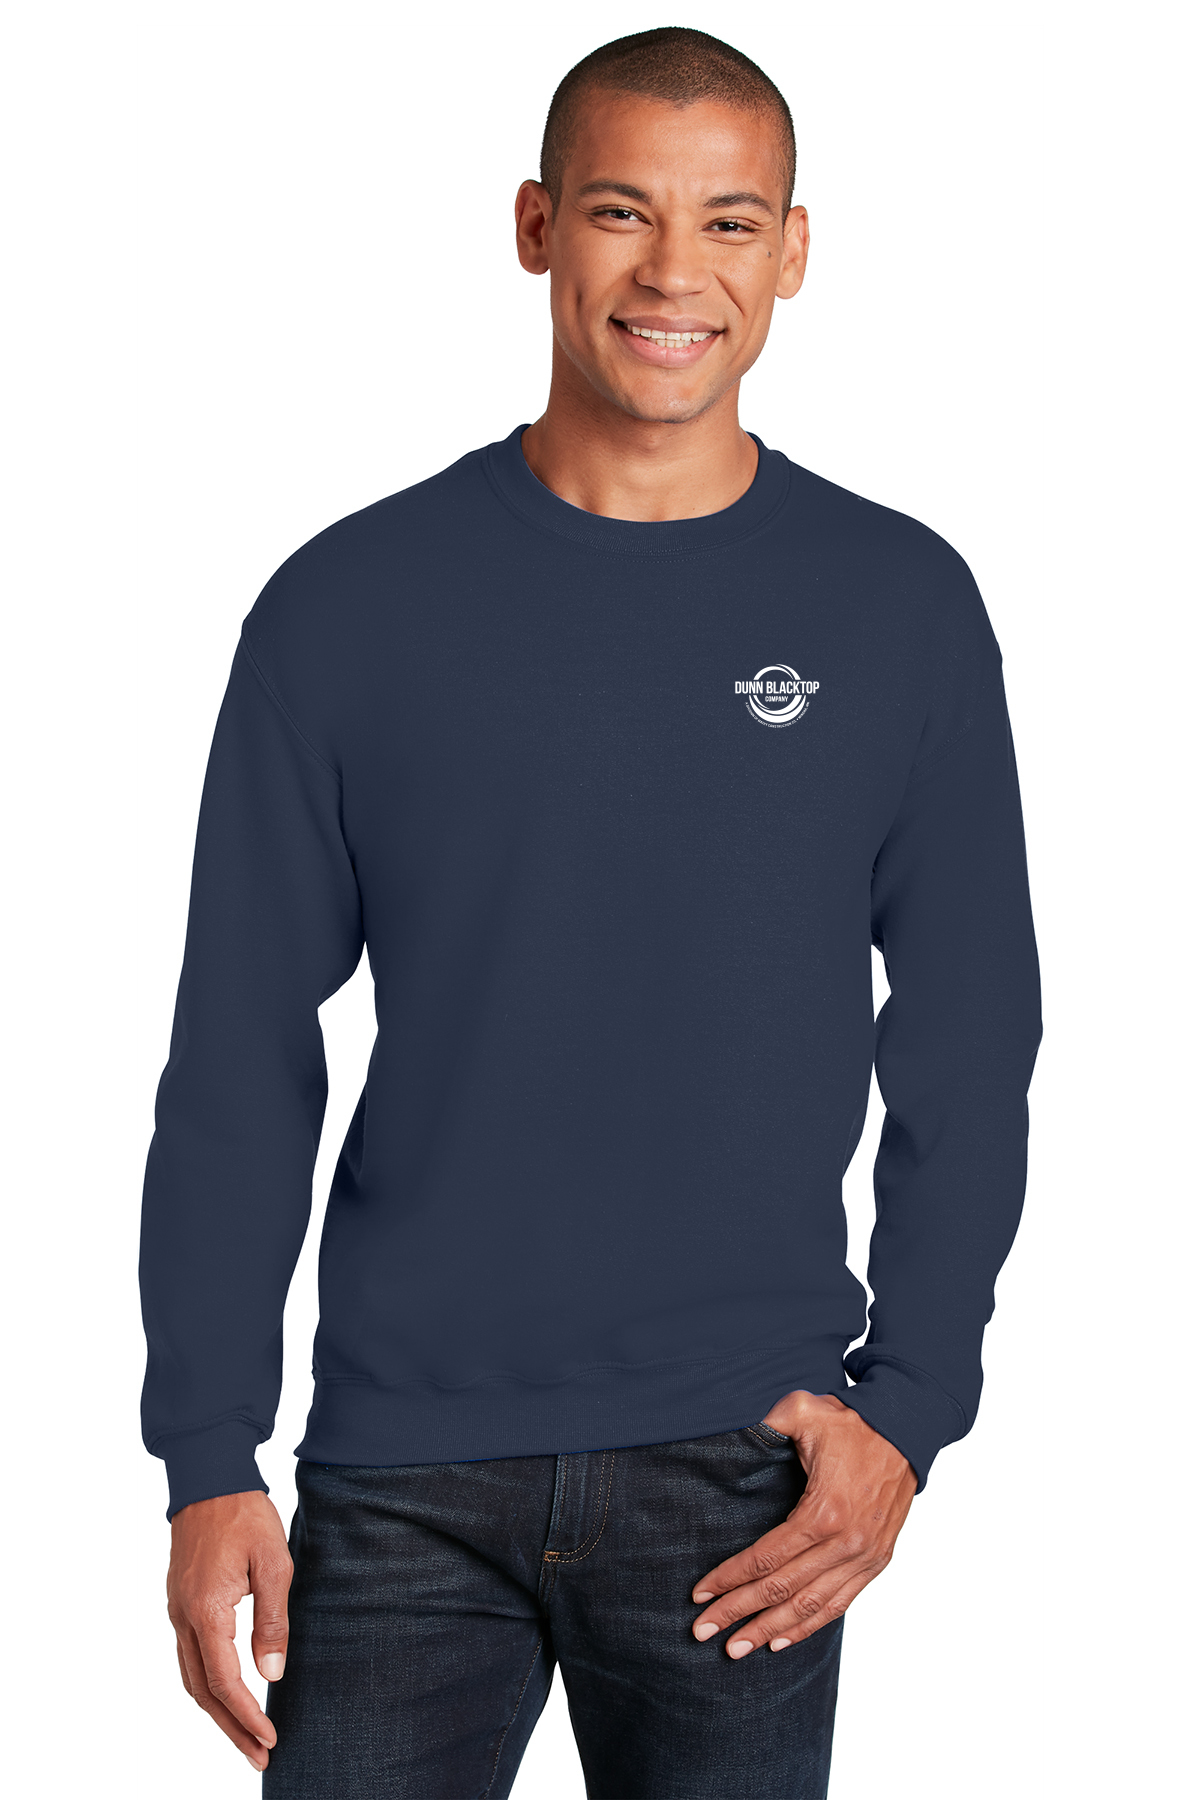 Dunn Blacktop Company Crewneck Sweatshirt